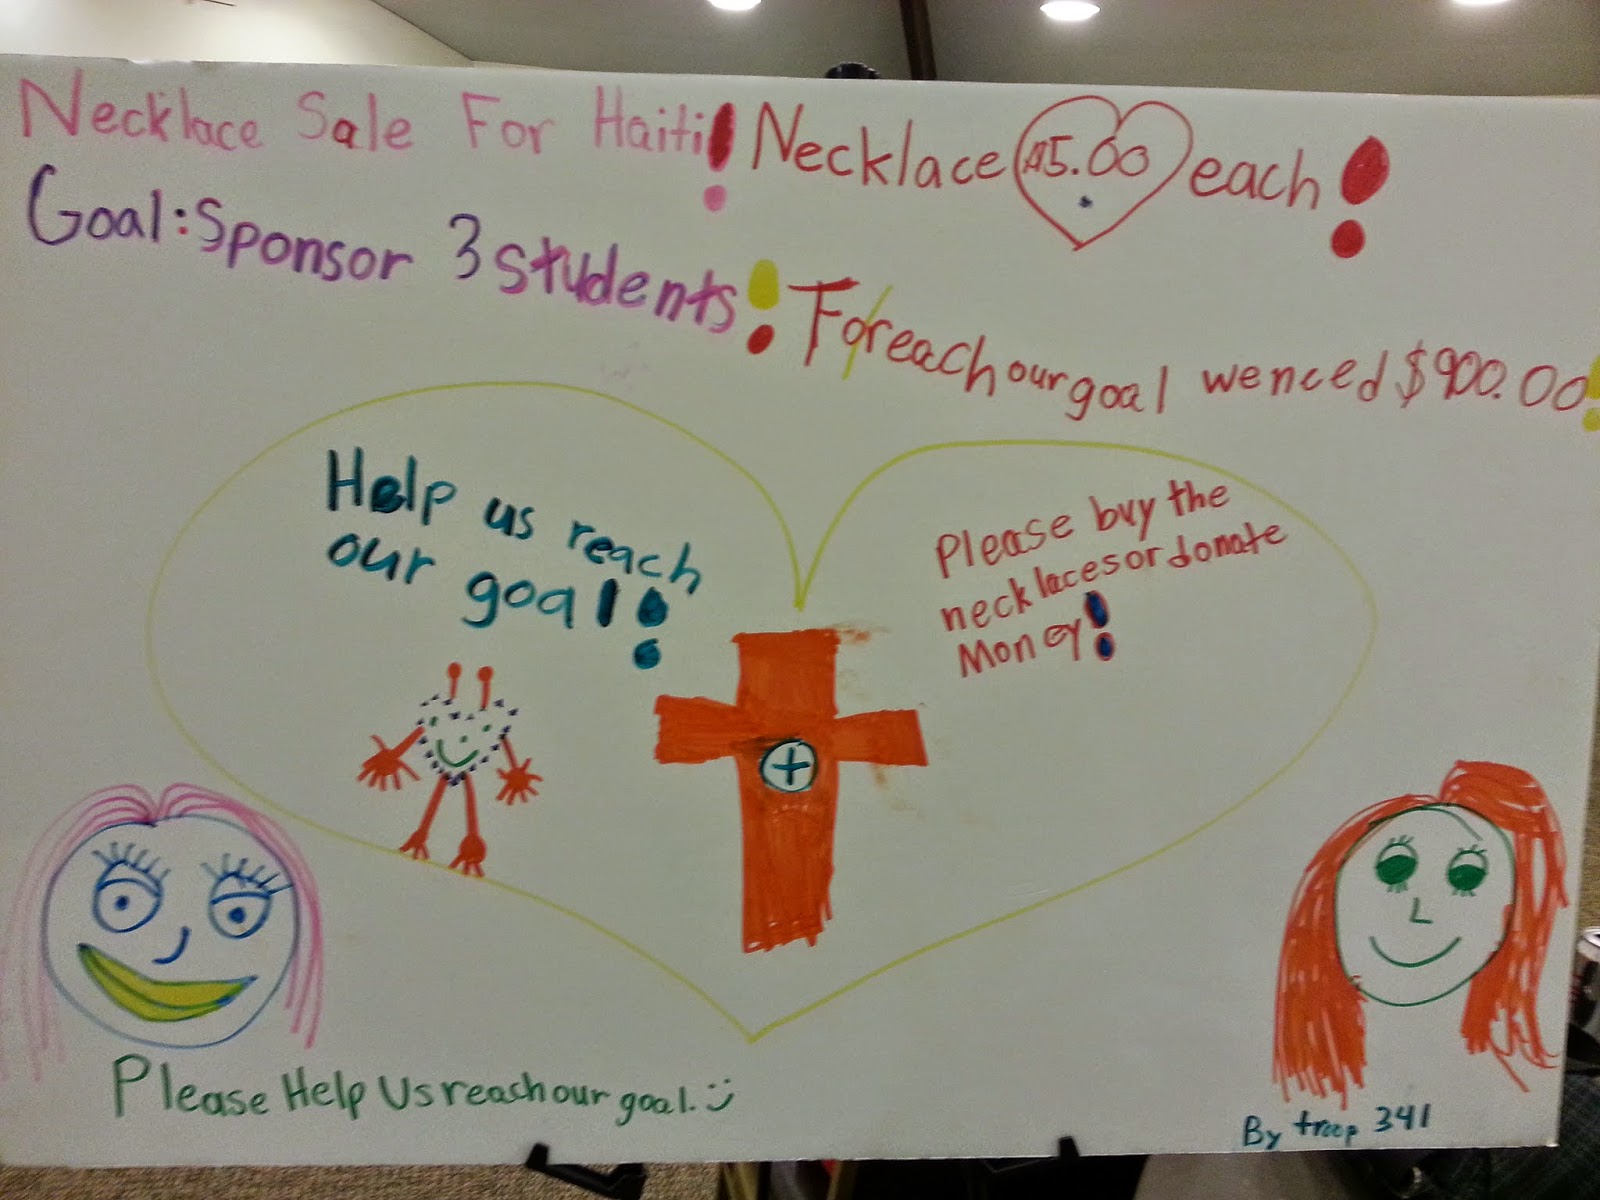 Hearts for Haiti fundraiser